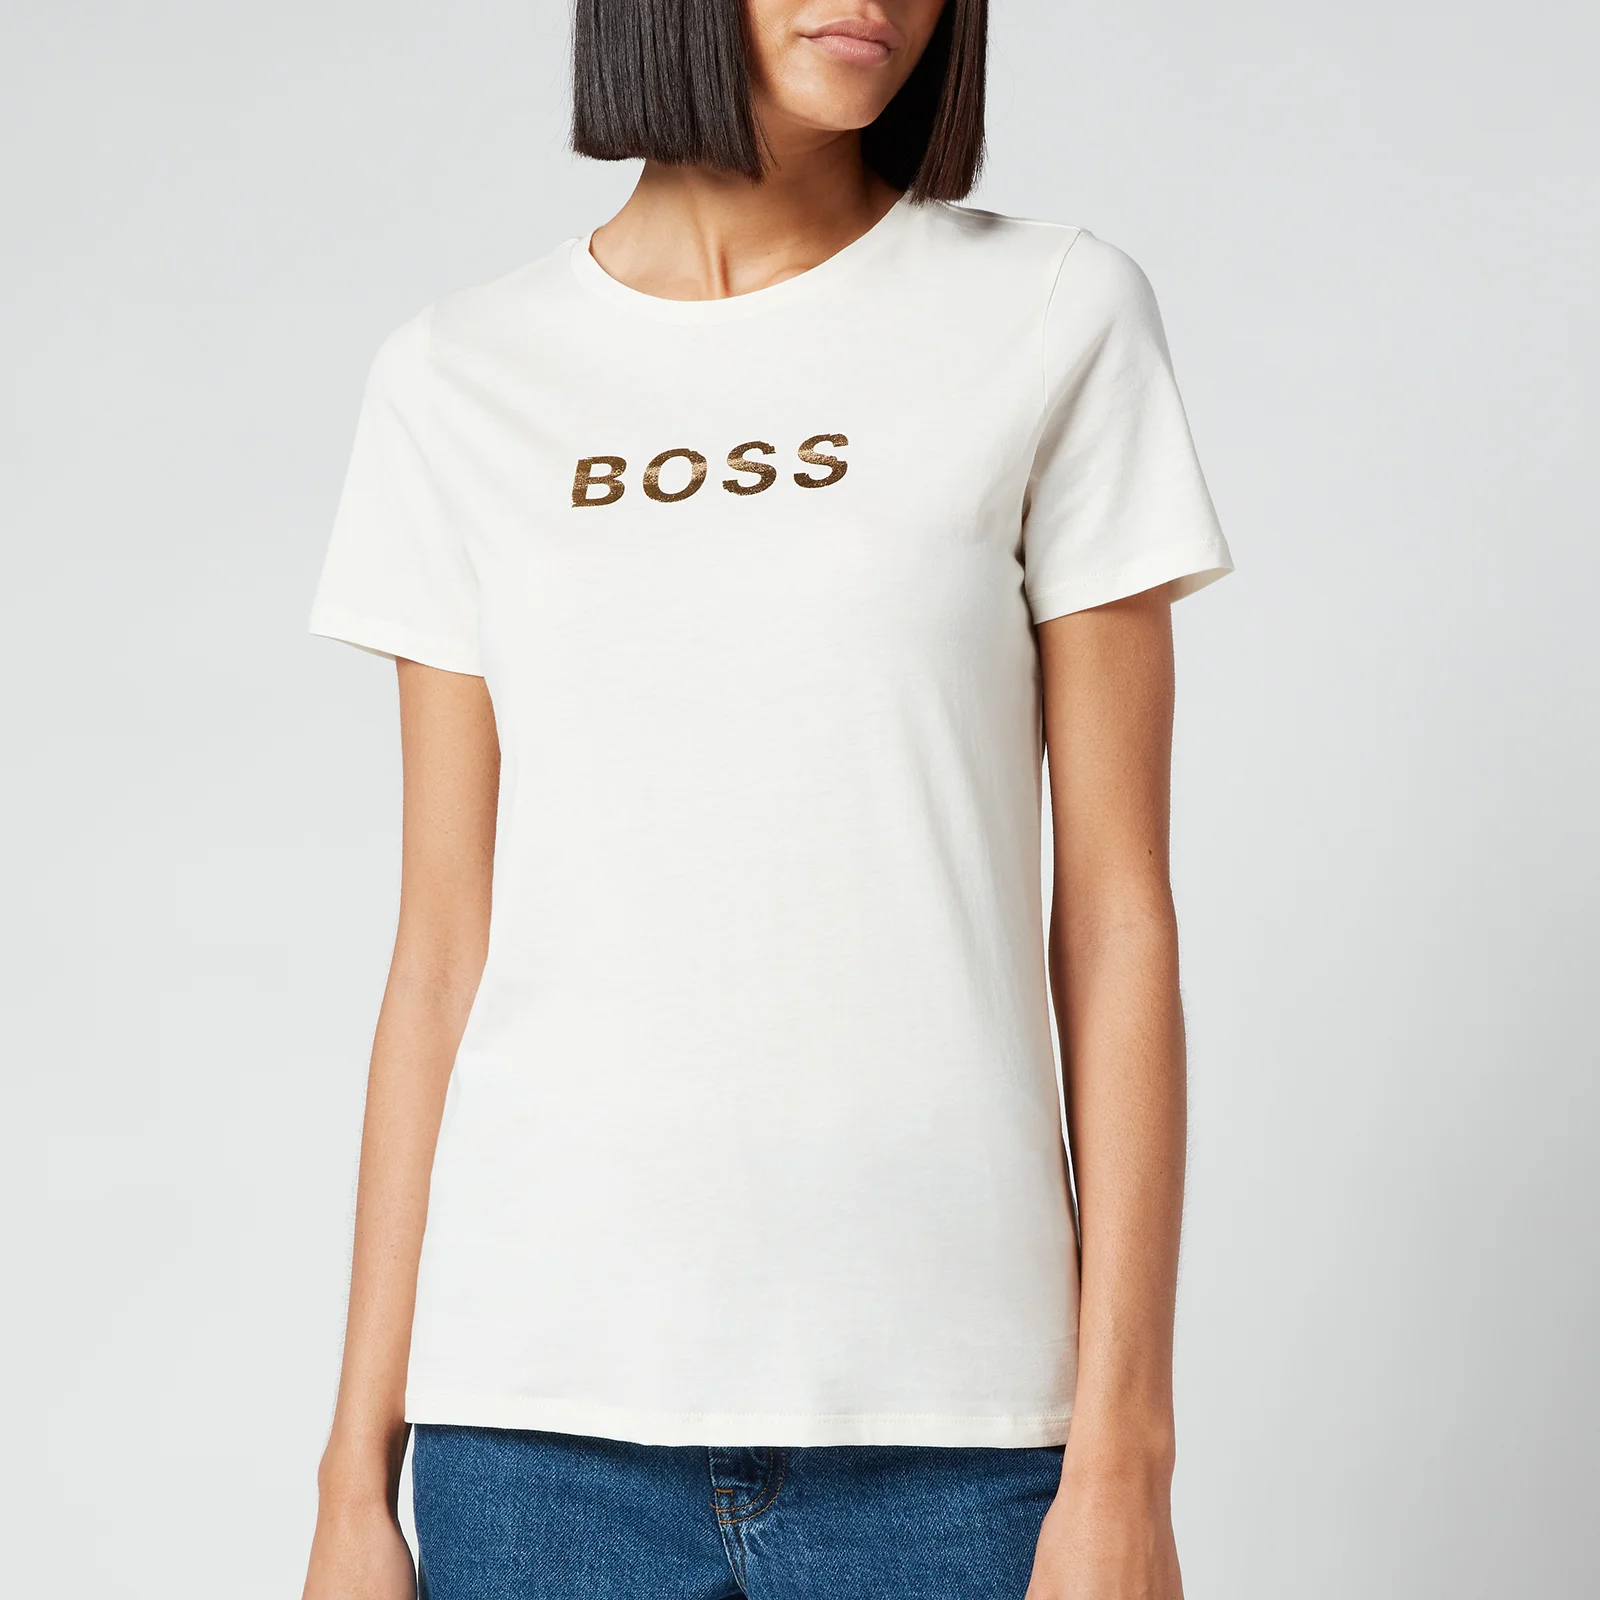 BOSS Women's C_Elogo Gold T-Shirt - Open White Image 1